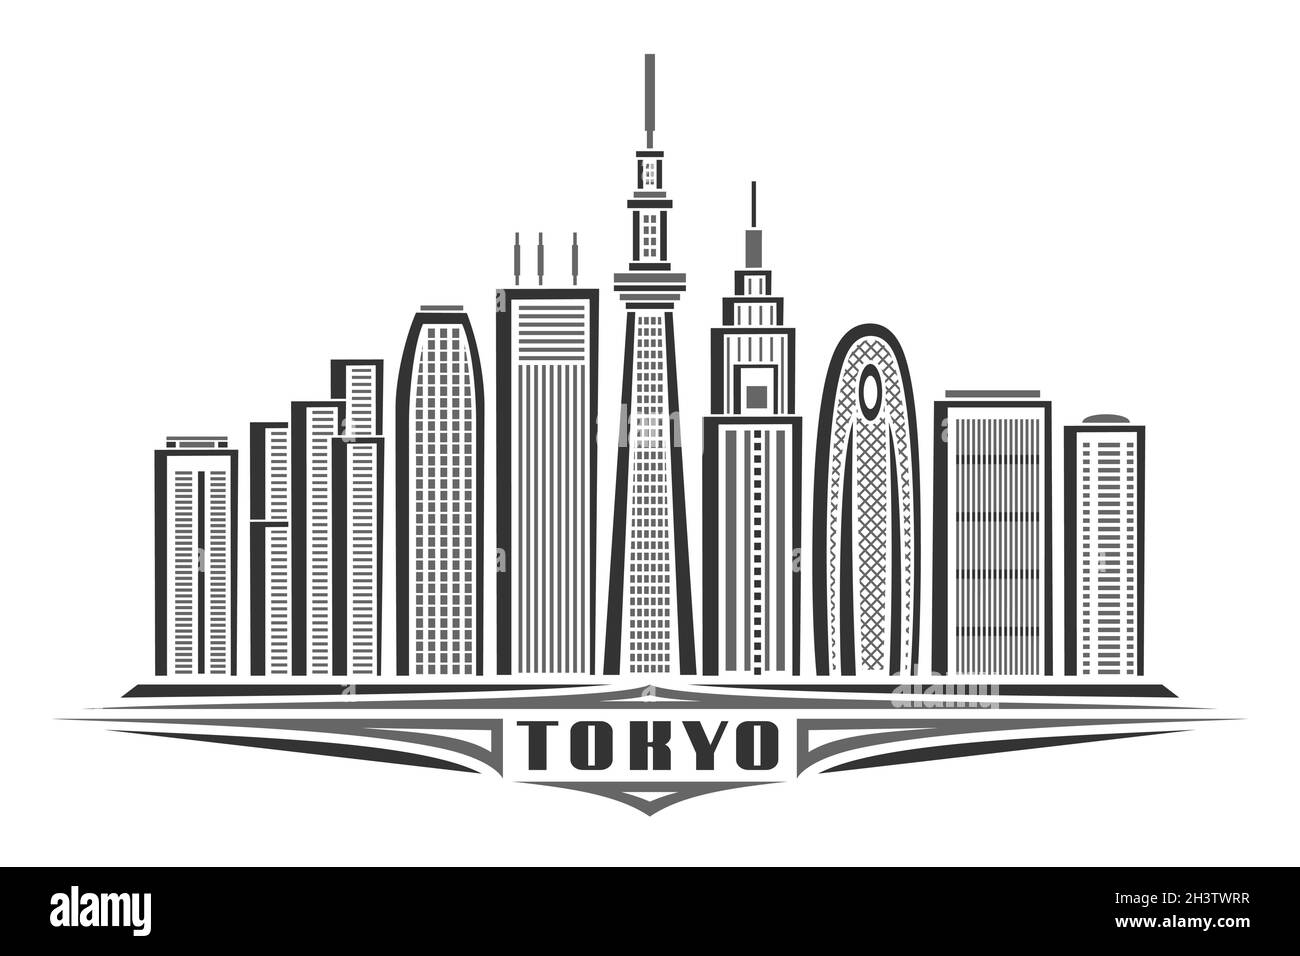 Vector illustration of Tokyo, monochrome horizontal poster with linear design famous tokyo city scape, urban line art concept with unique decorative l Stock Vector